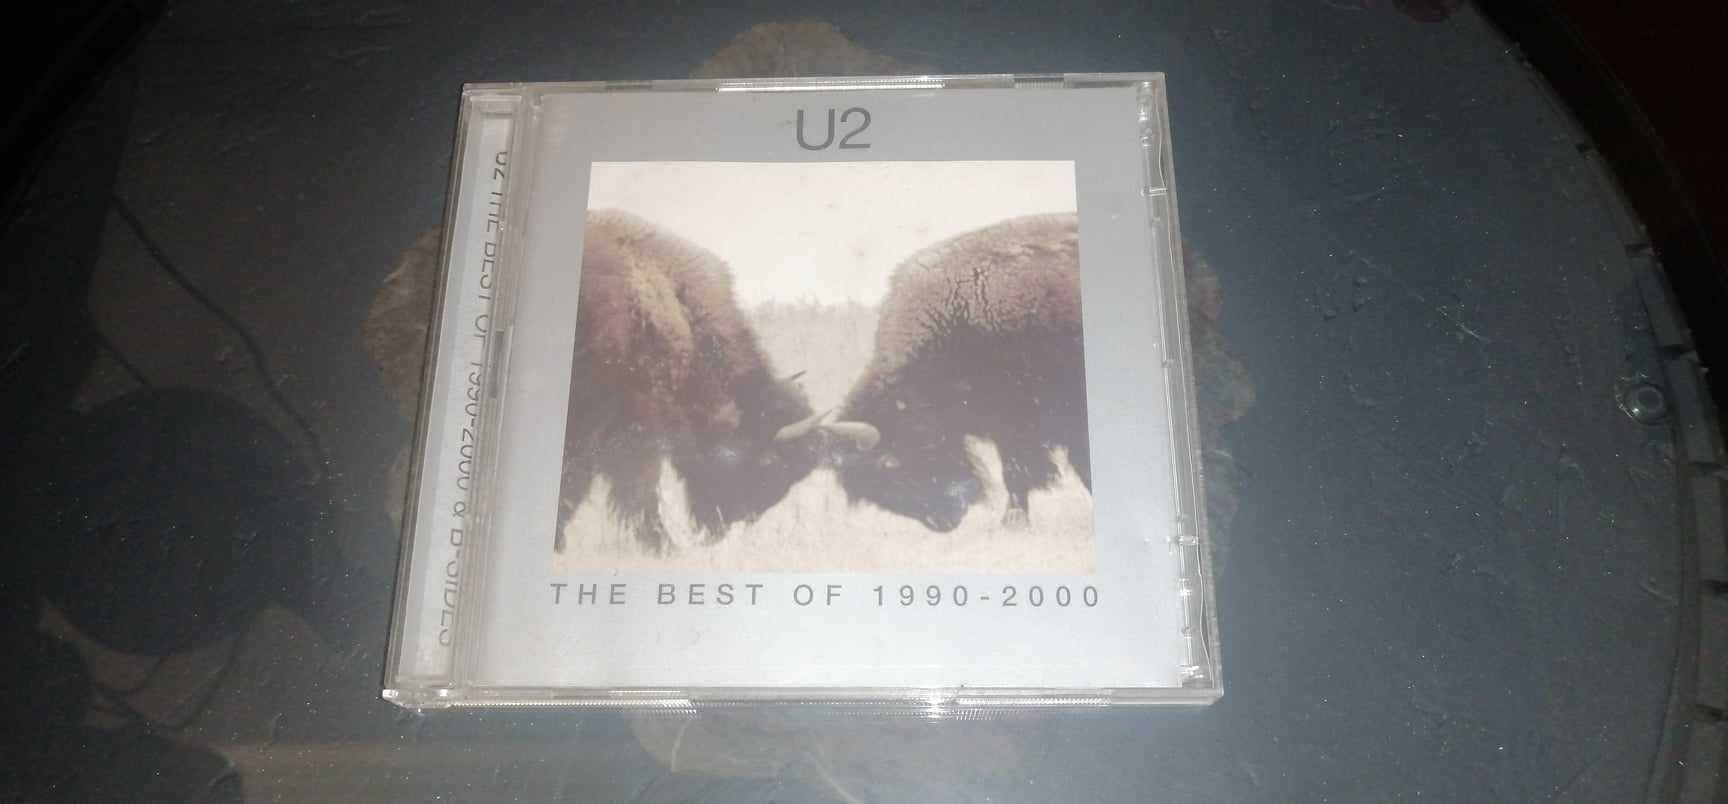 CD U2 "The Best Of ..." (2 CD's) - bom estado